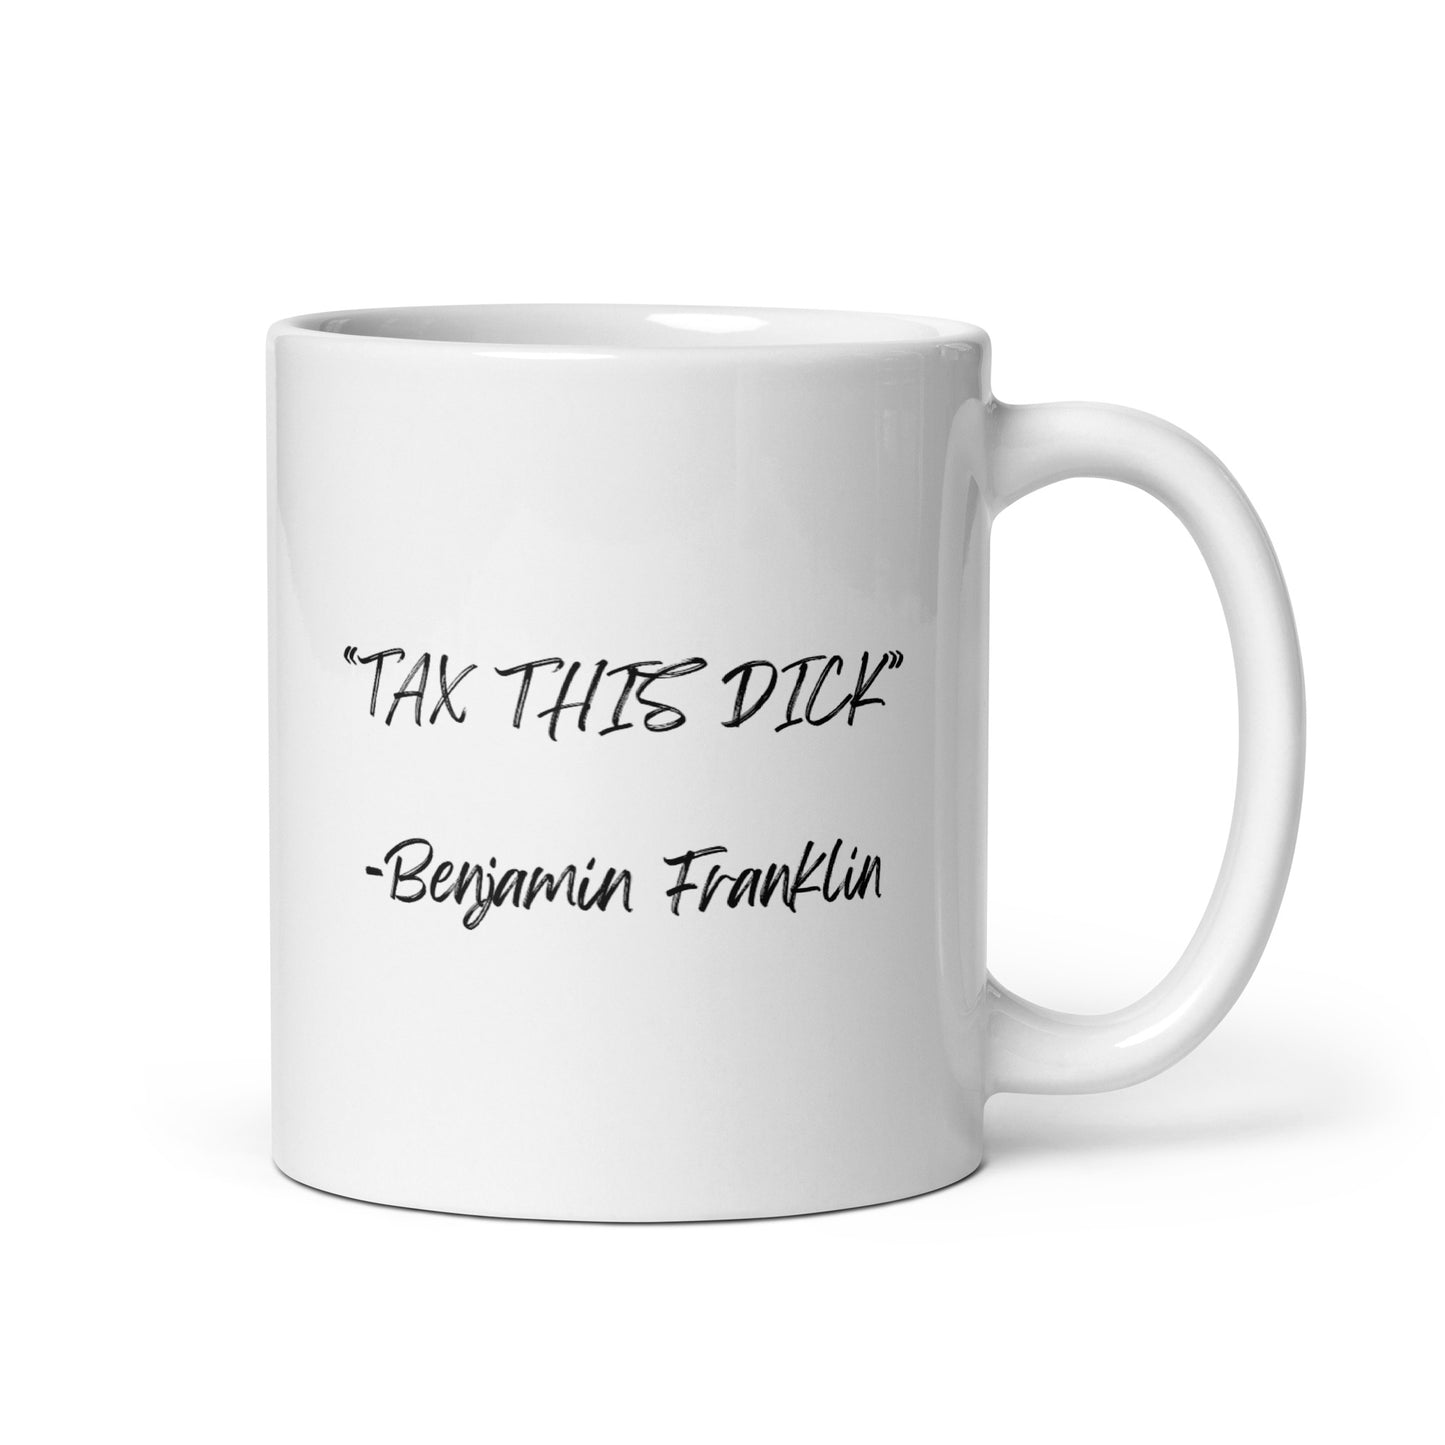 "Tax This Dick" White Glossy Mug